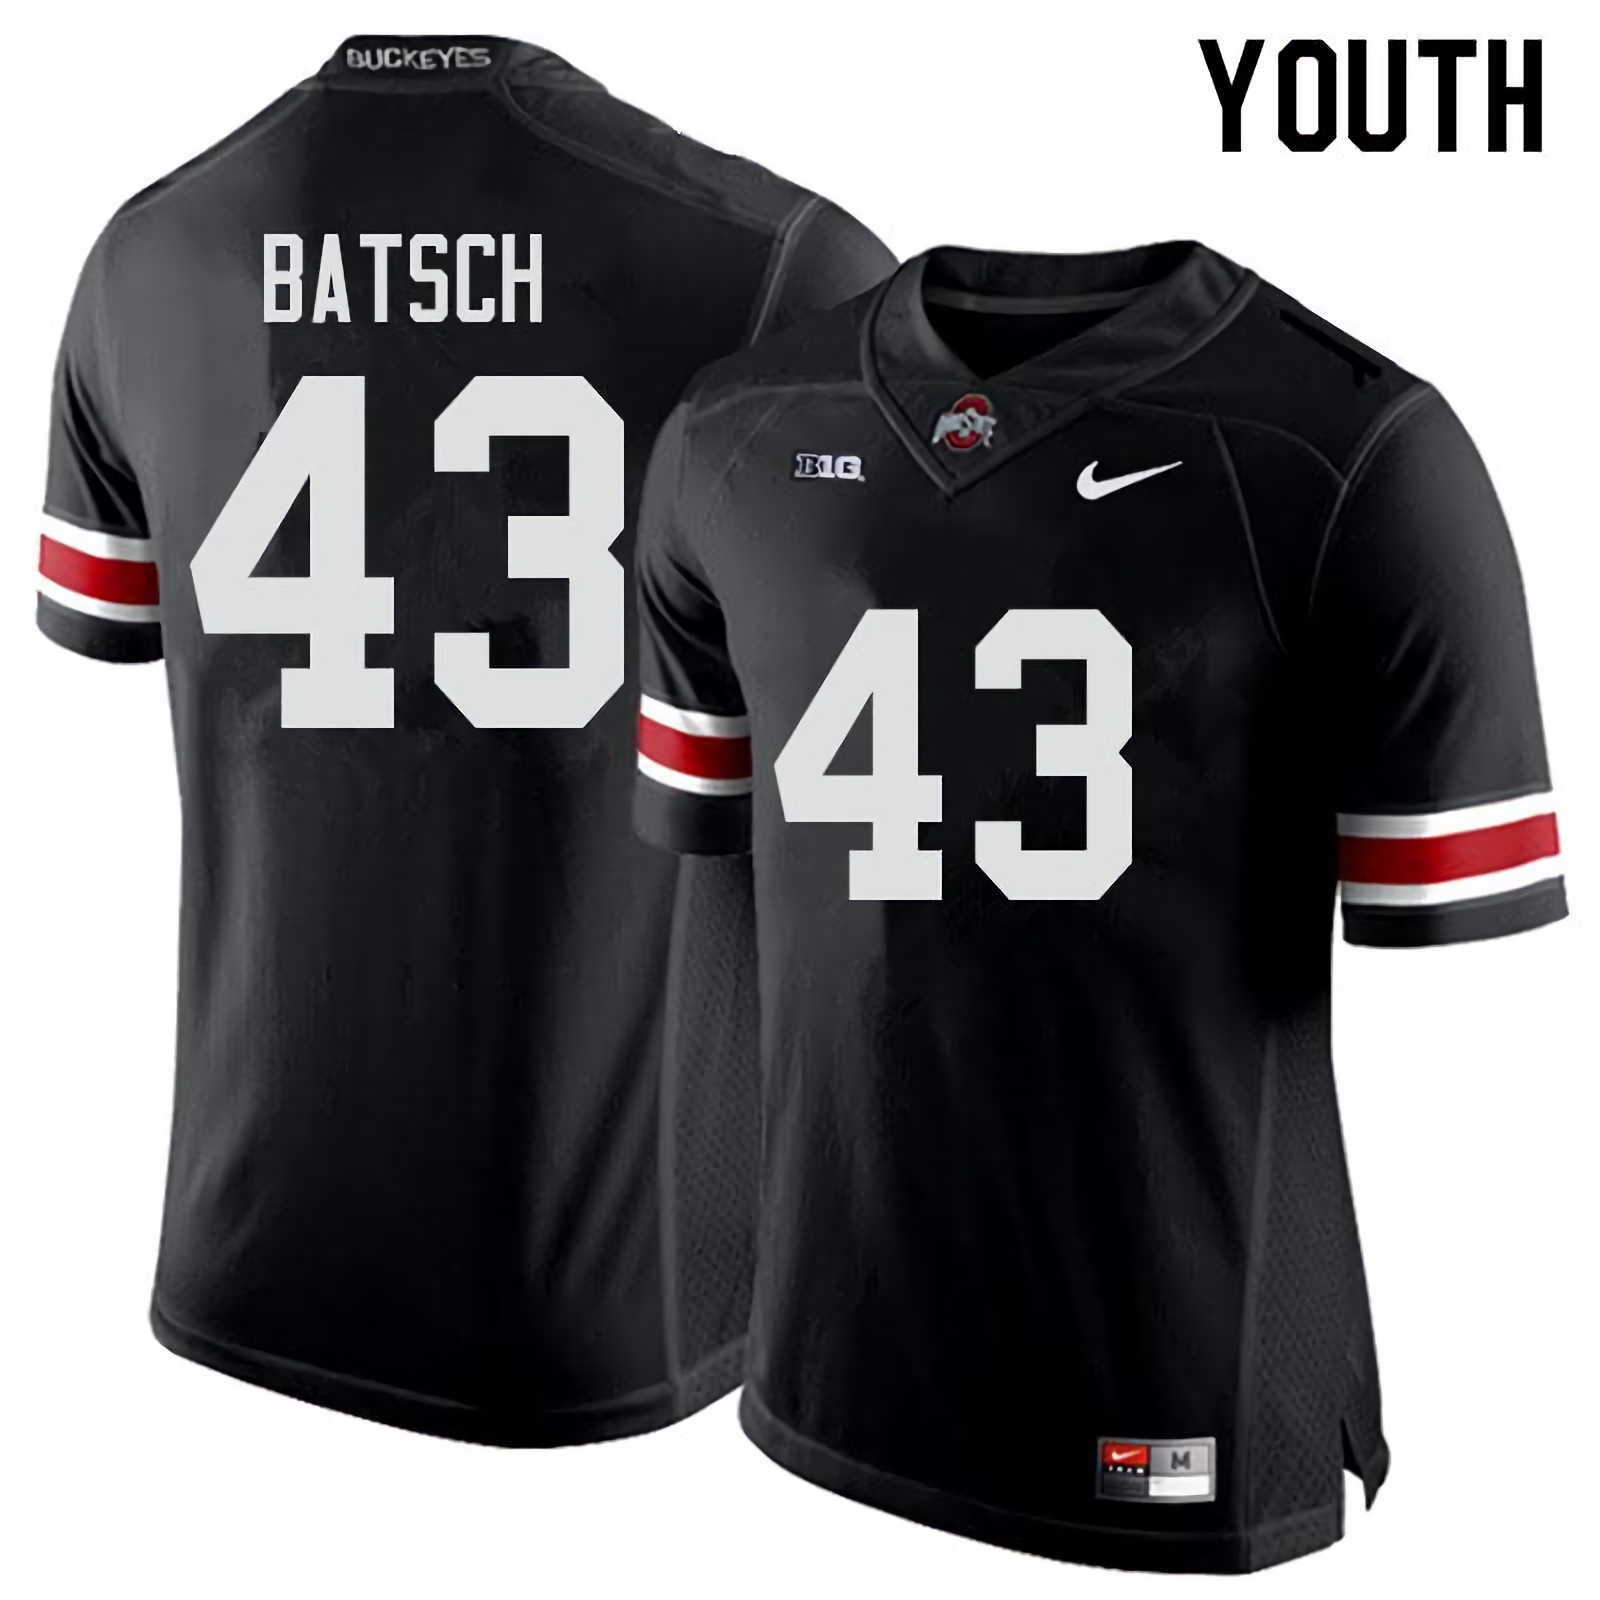 Ryan Batsch Ohio State Buckeyes Youth NCAA #43 Nike Black College Stitched Football Jersey YGT8556GX